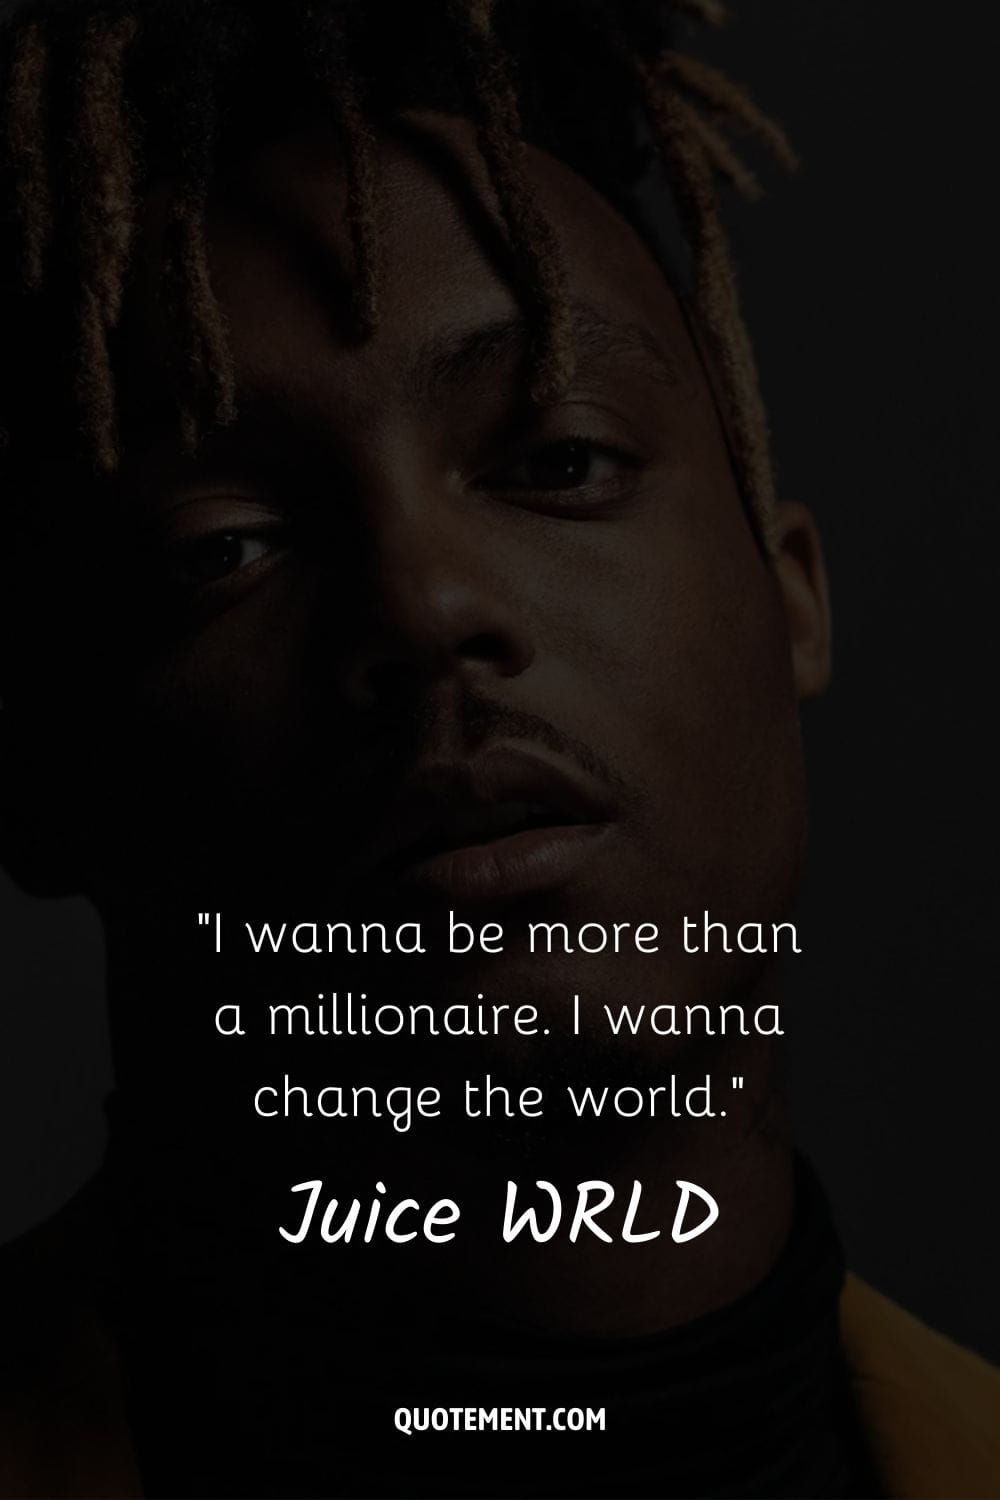 I wanna be more than a millionaire. I wanna change the world